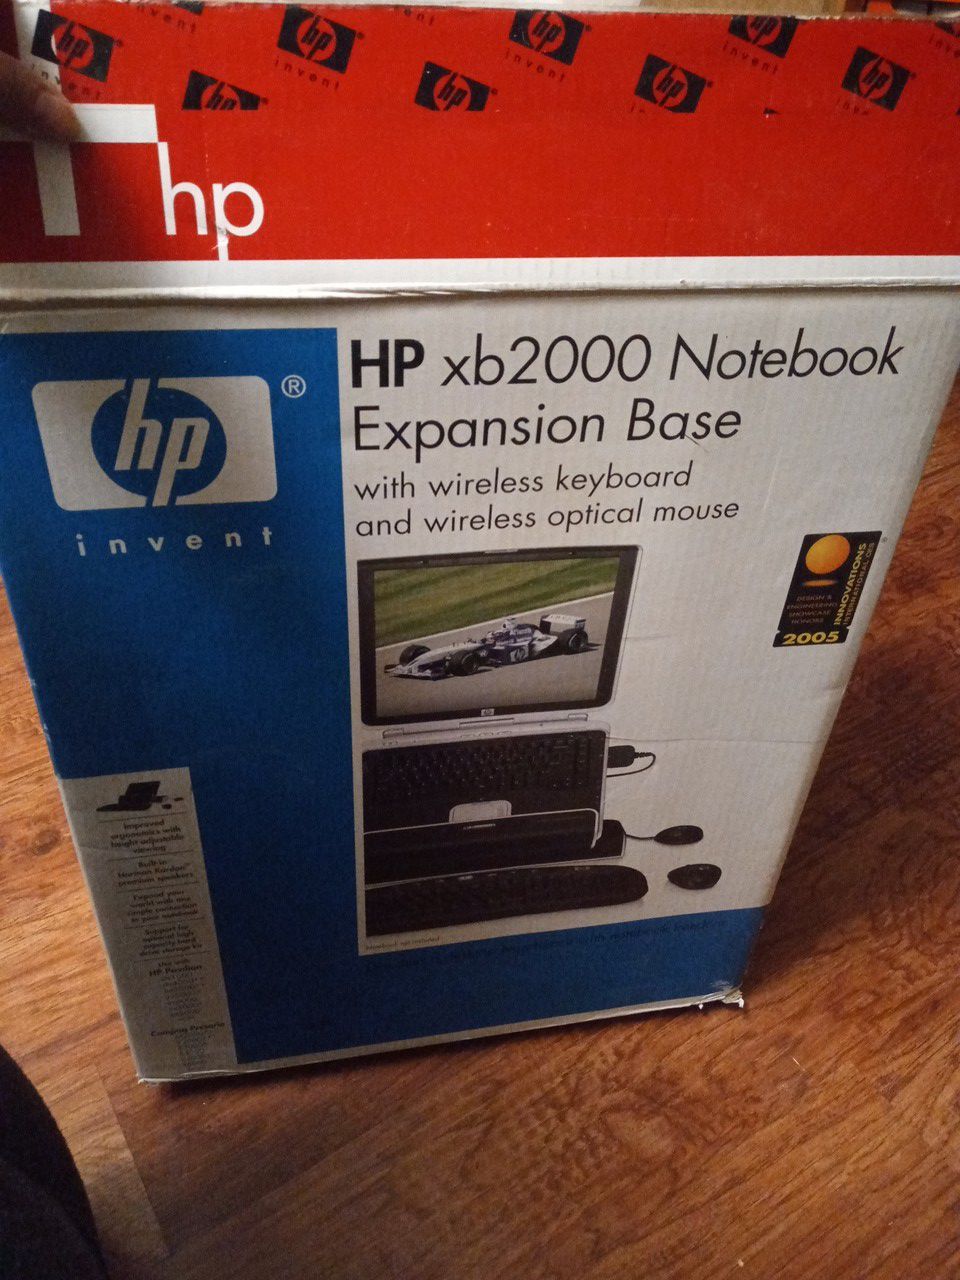 HP xb2000 Notebook Expansion Base